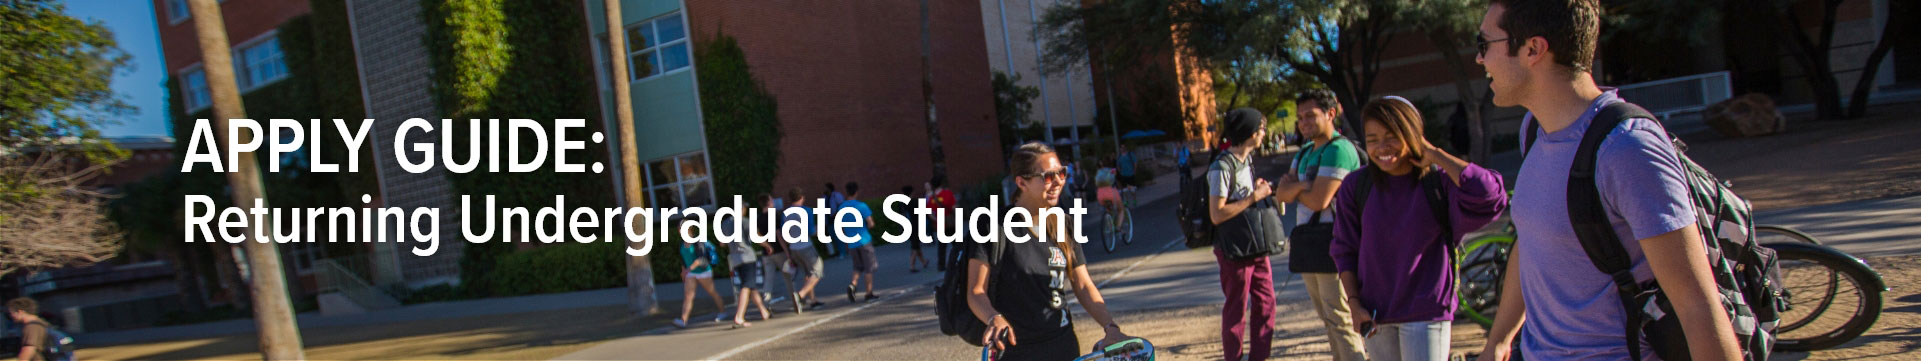 Apply Guide: Returning Undergraduate Student